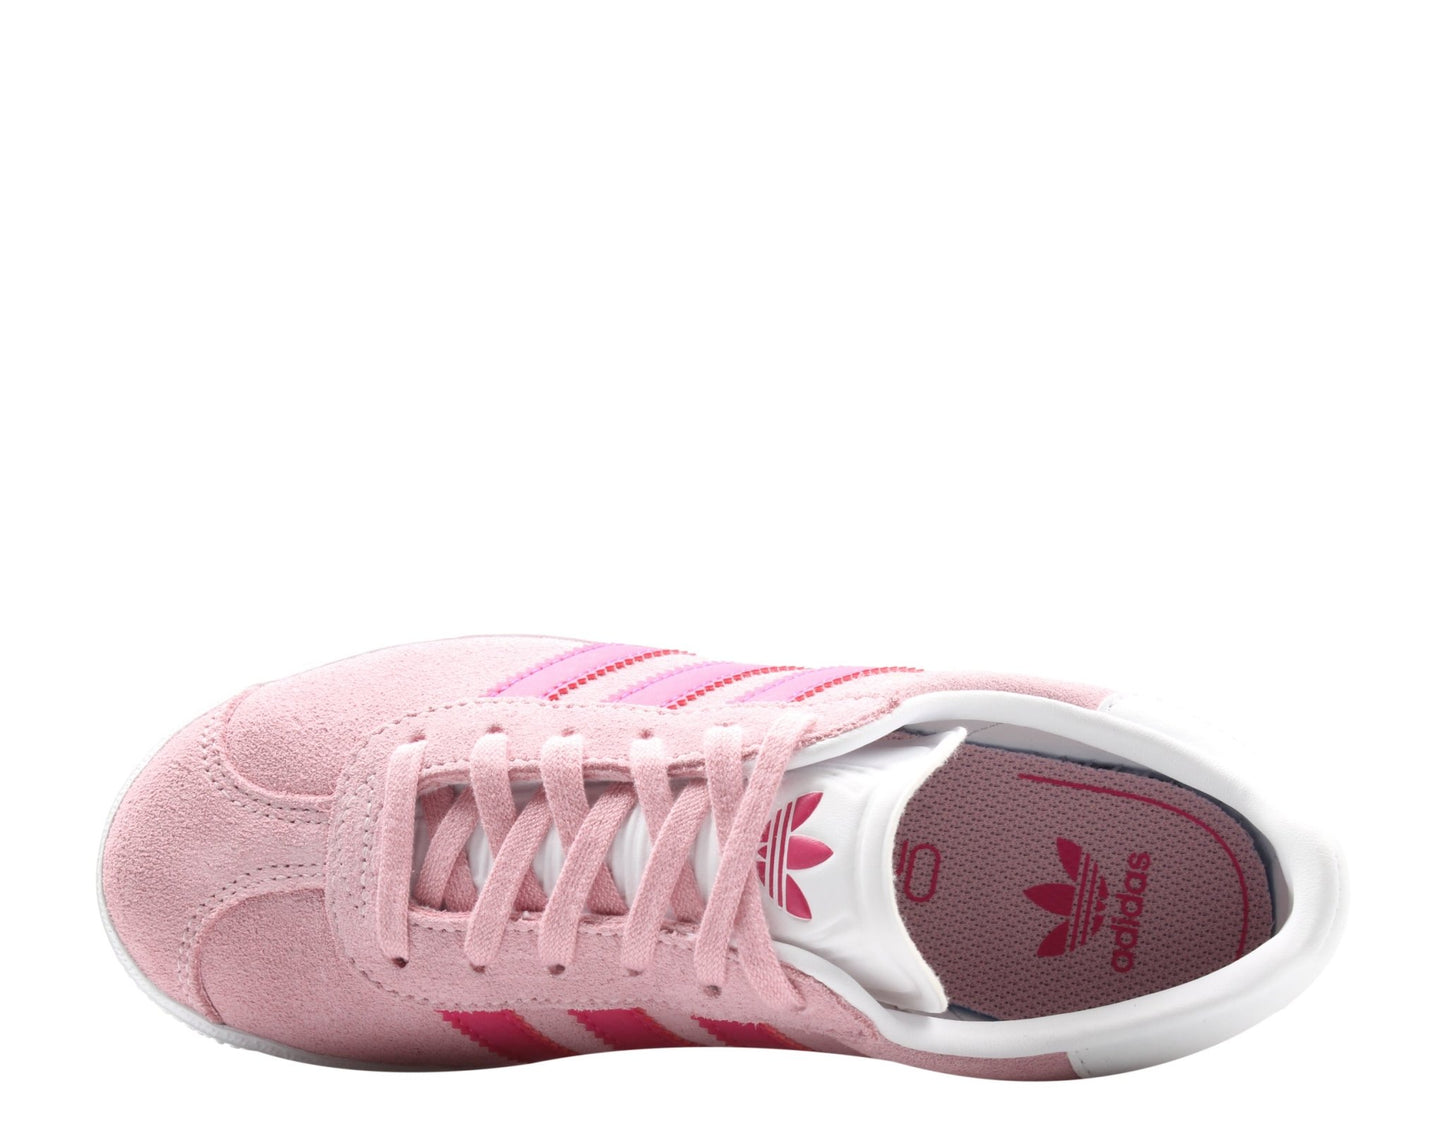 Adidas Originals Gazelle C Children Pink/Magenta/White Kids Casual Shoes B41534 - Becauze